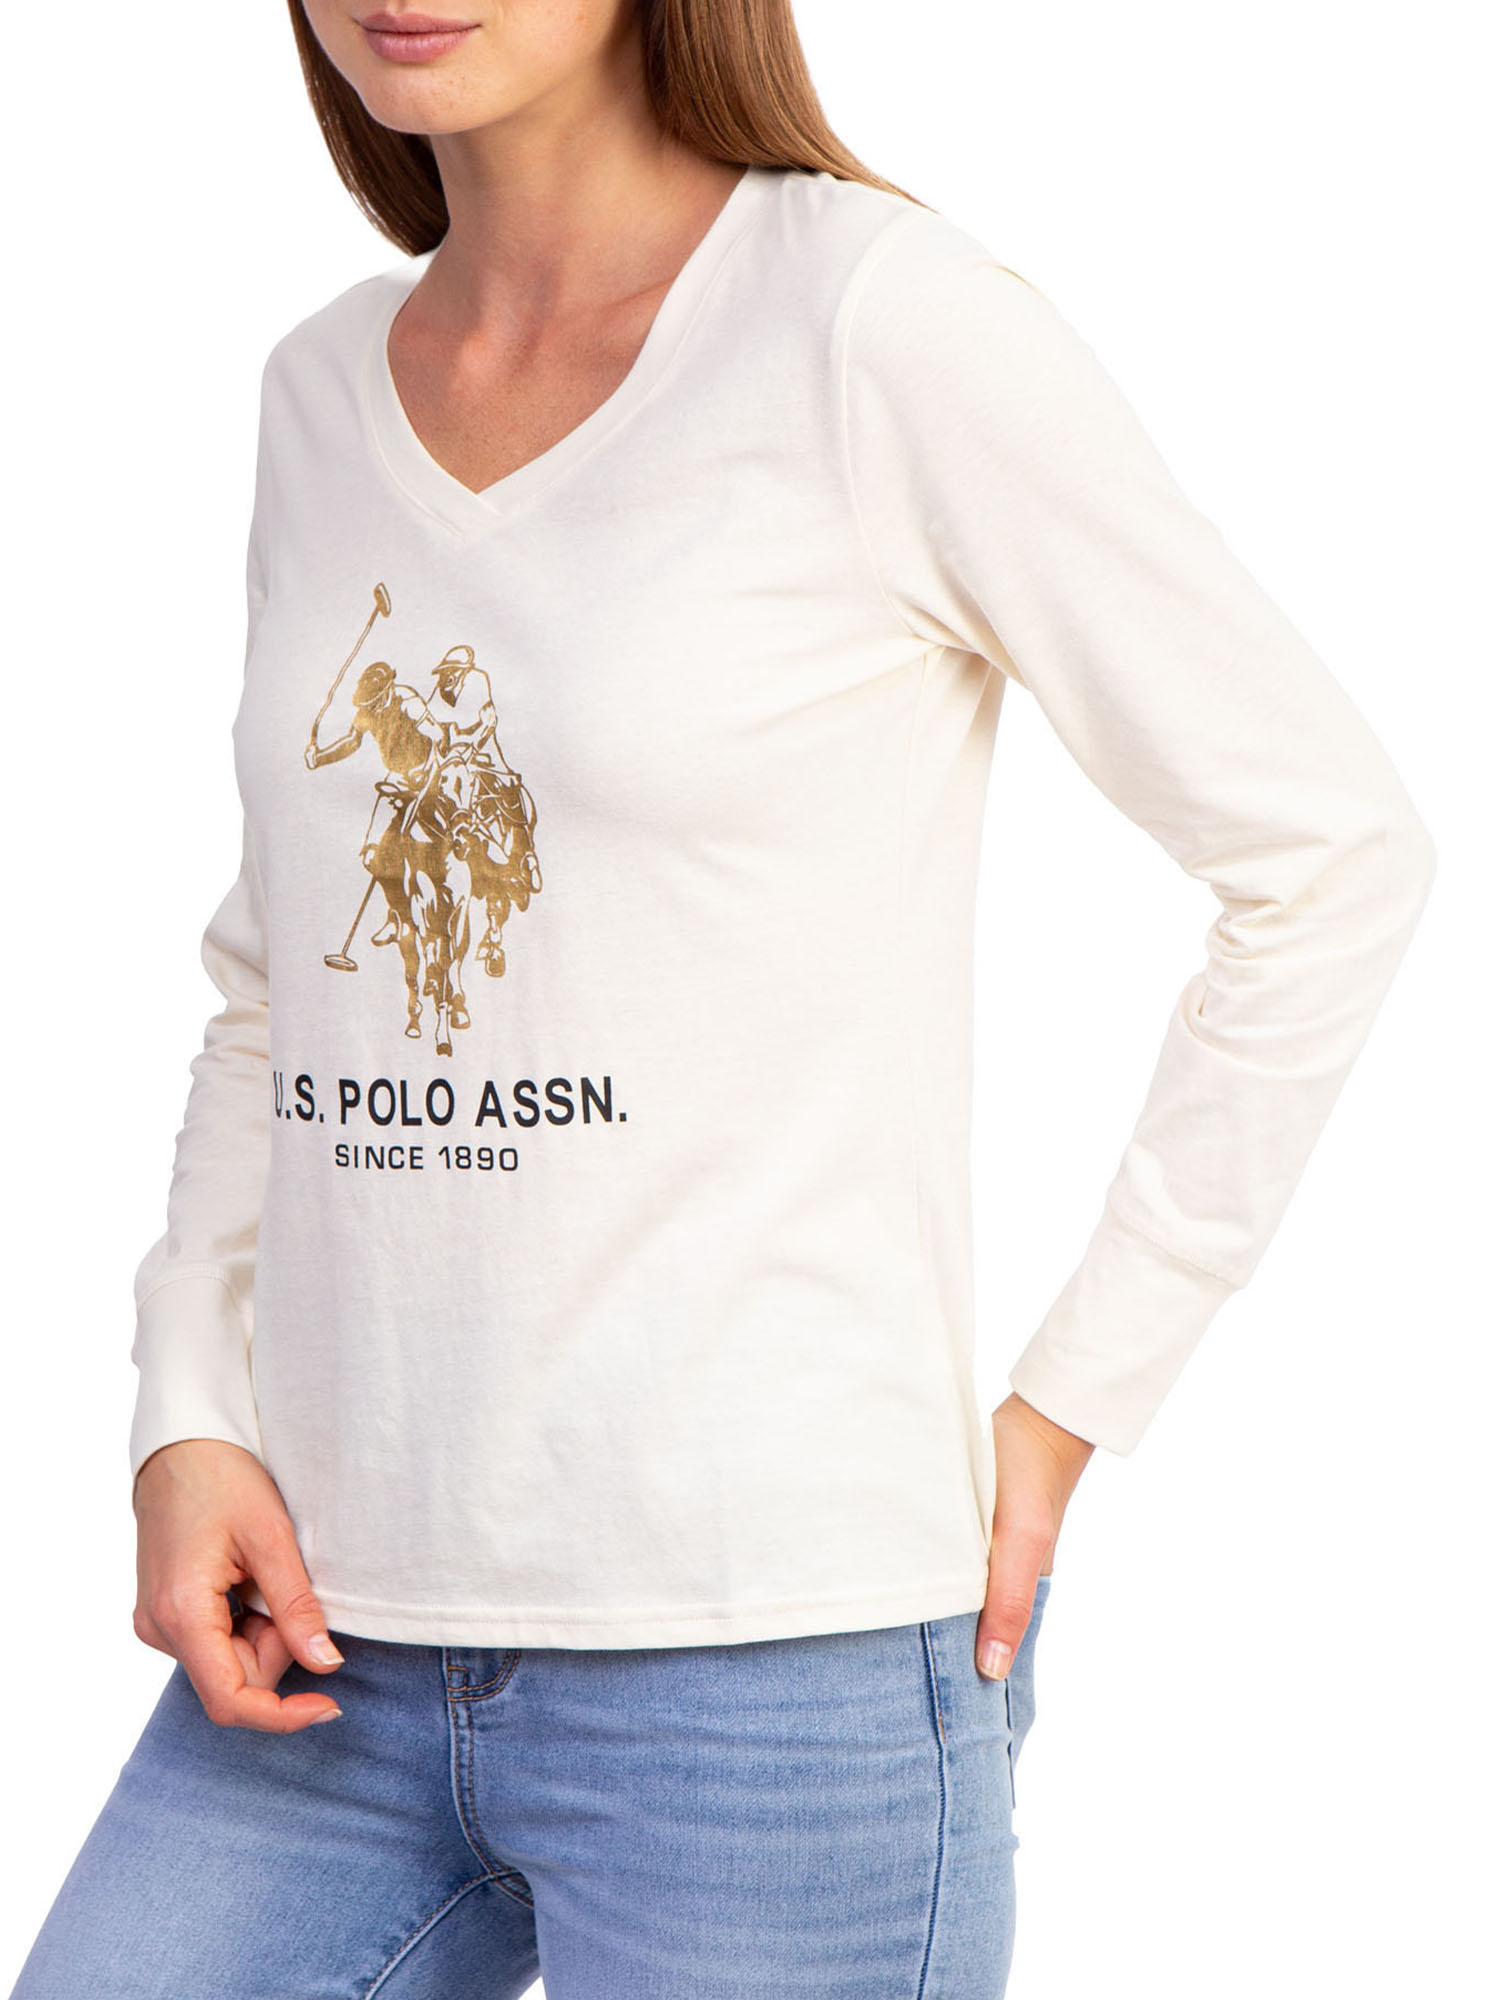 U.S. Polo Assn. Womens' Long Sleeve Graphic Jersey T Shirt - image 3 of 4